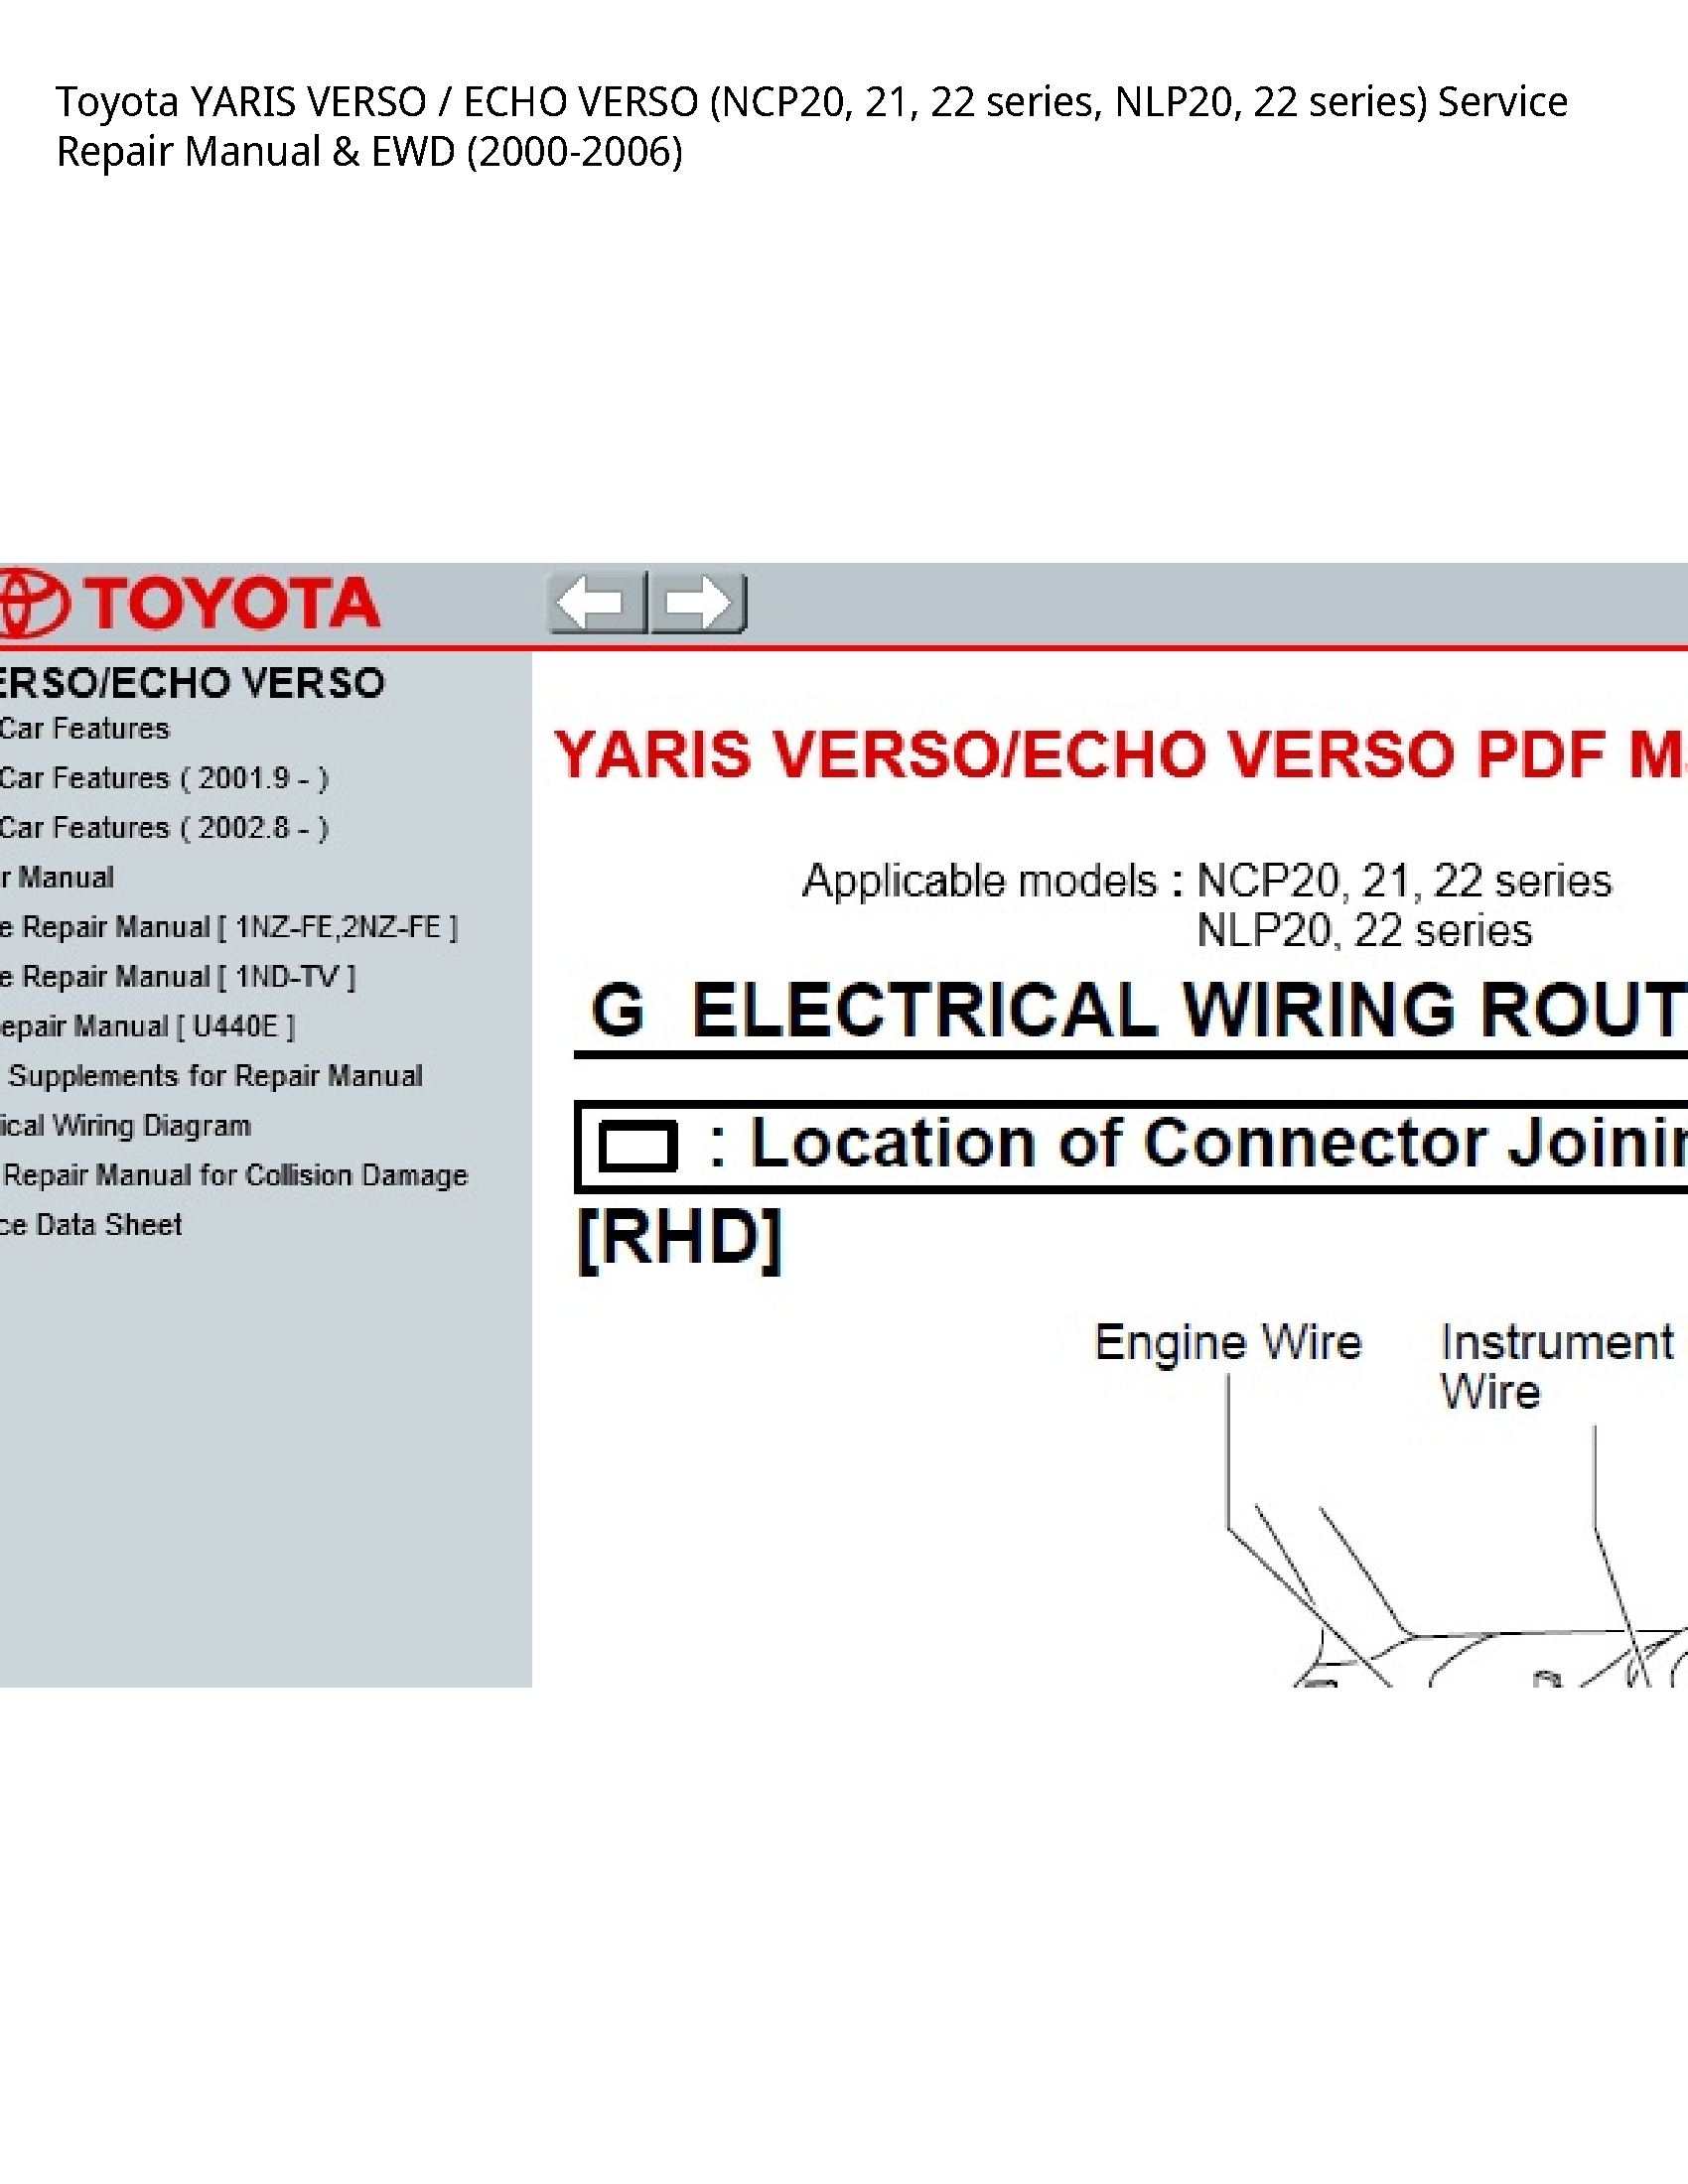 Toyota (NCP20 YARIS VERSO ECHO VERSO series manual